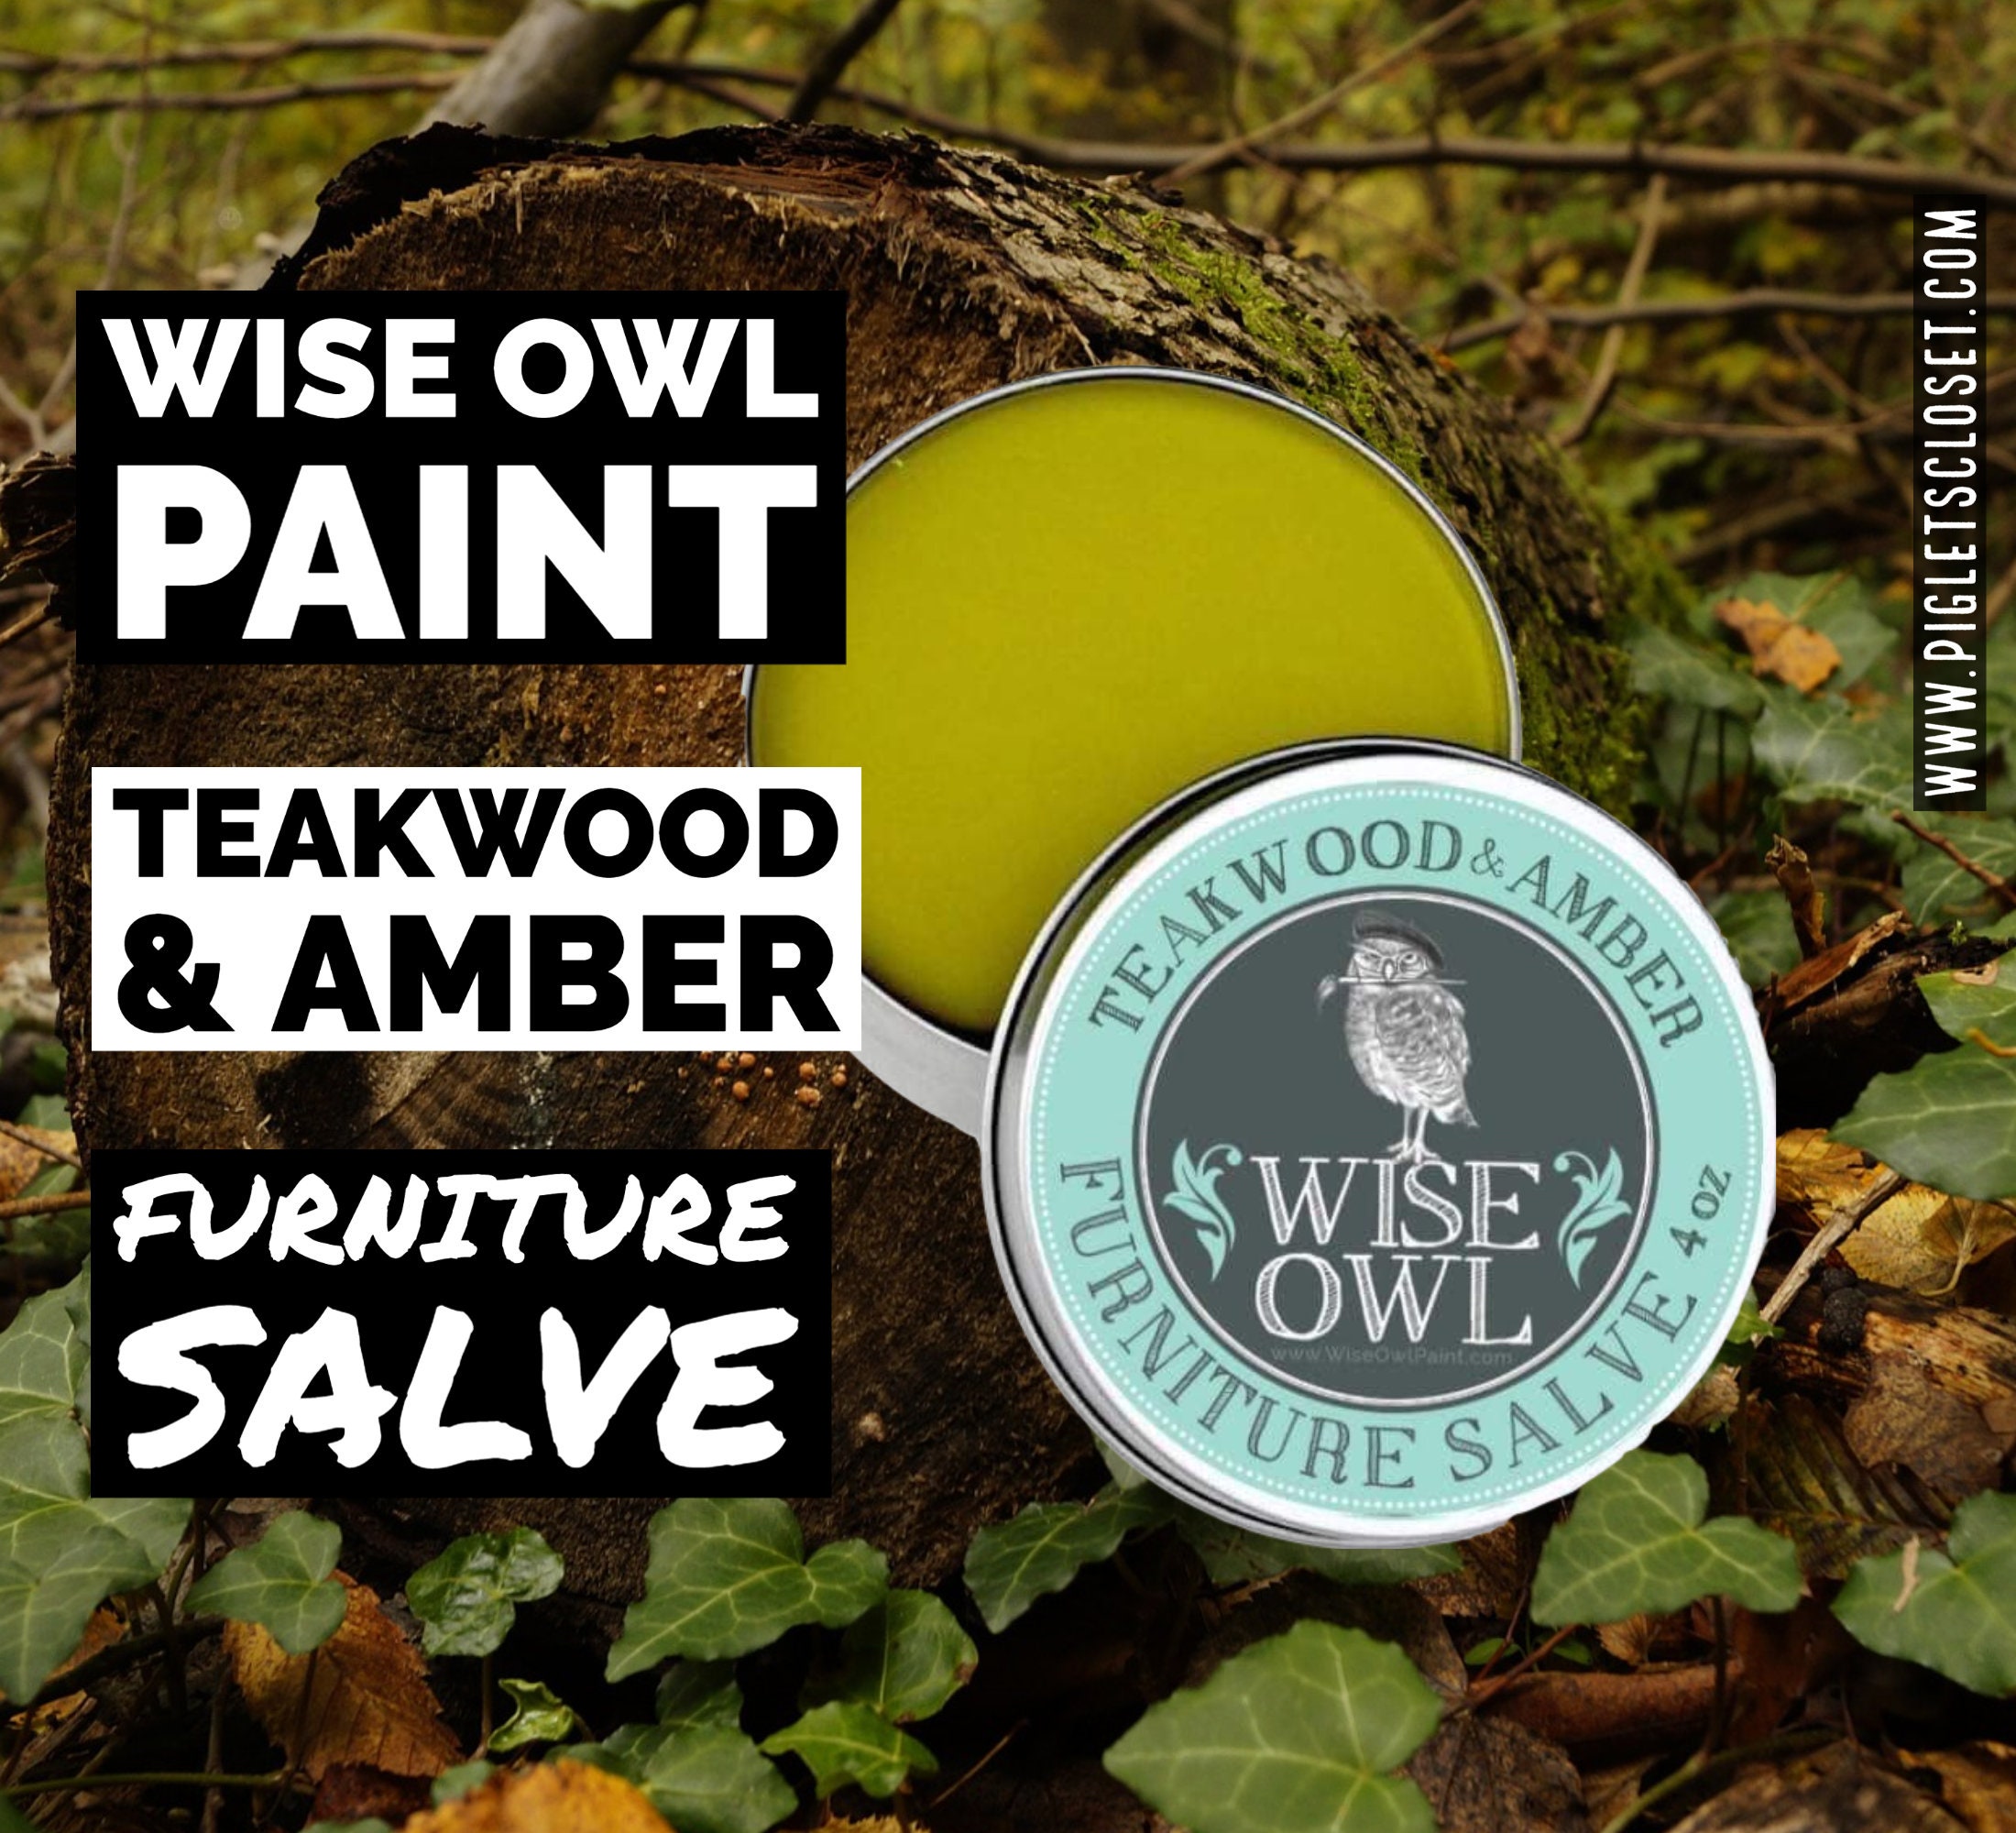 Teakwood & Amber Furniture Salve Wise Owl Paint Natural Salves 